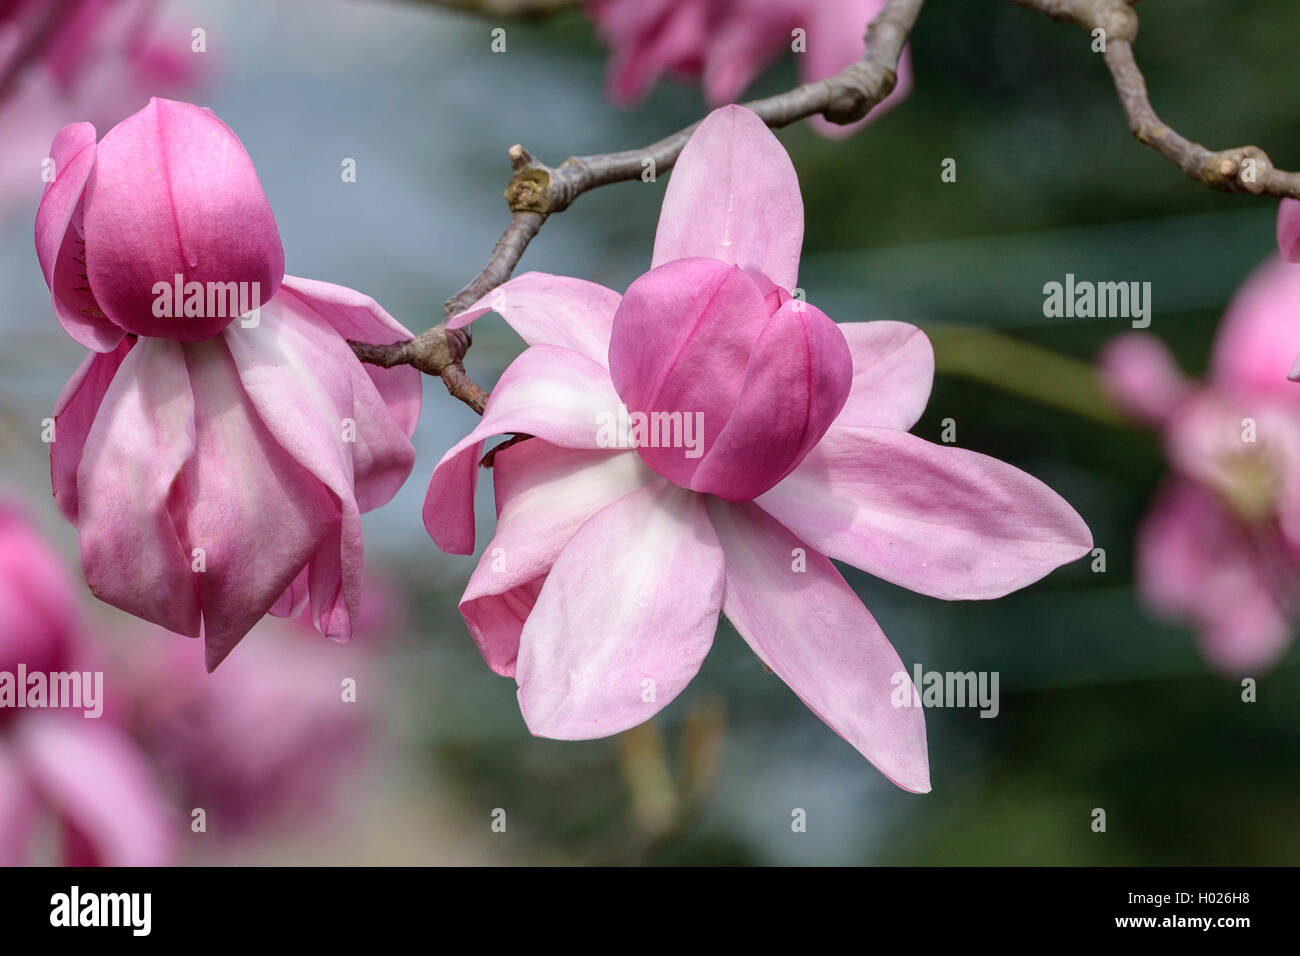 magnolia (Magnolia campbellii 'Darjeeling', Magnolia campbellii Darjeeling), cultivar Darjeeling Stock Photo